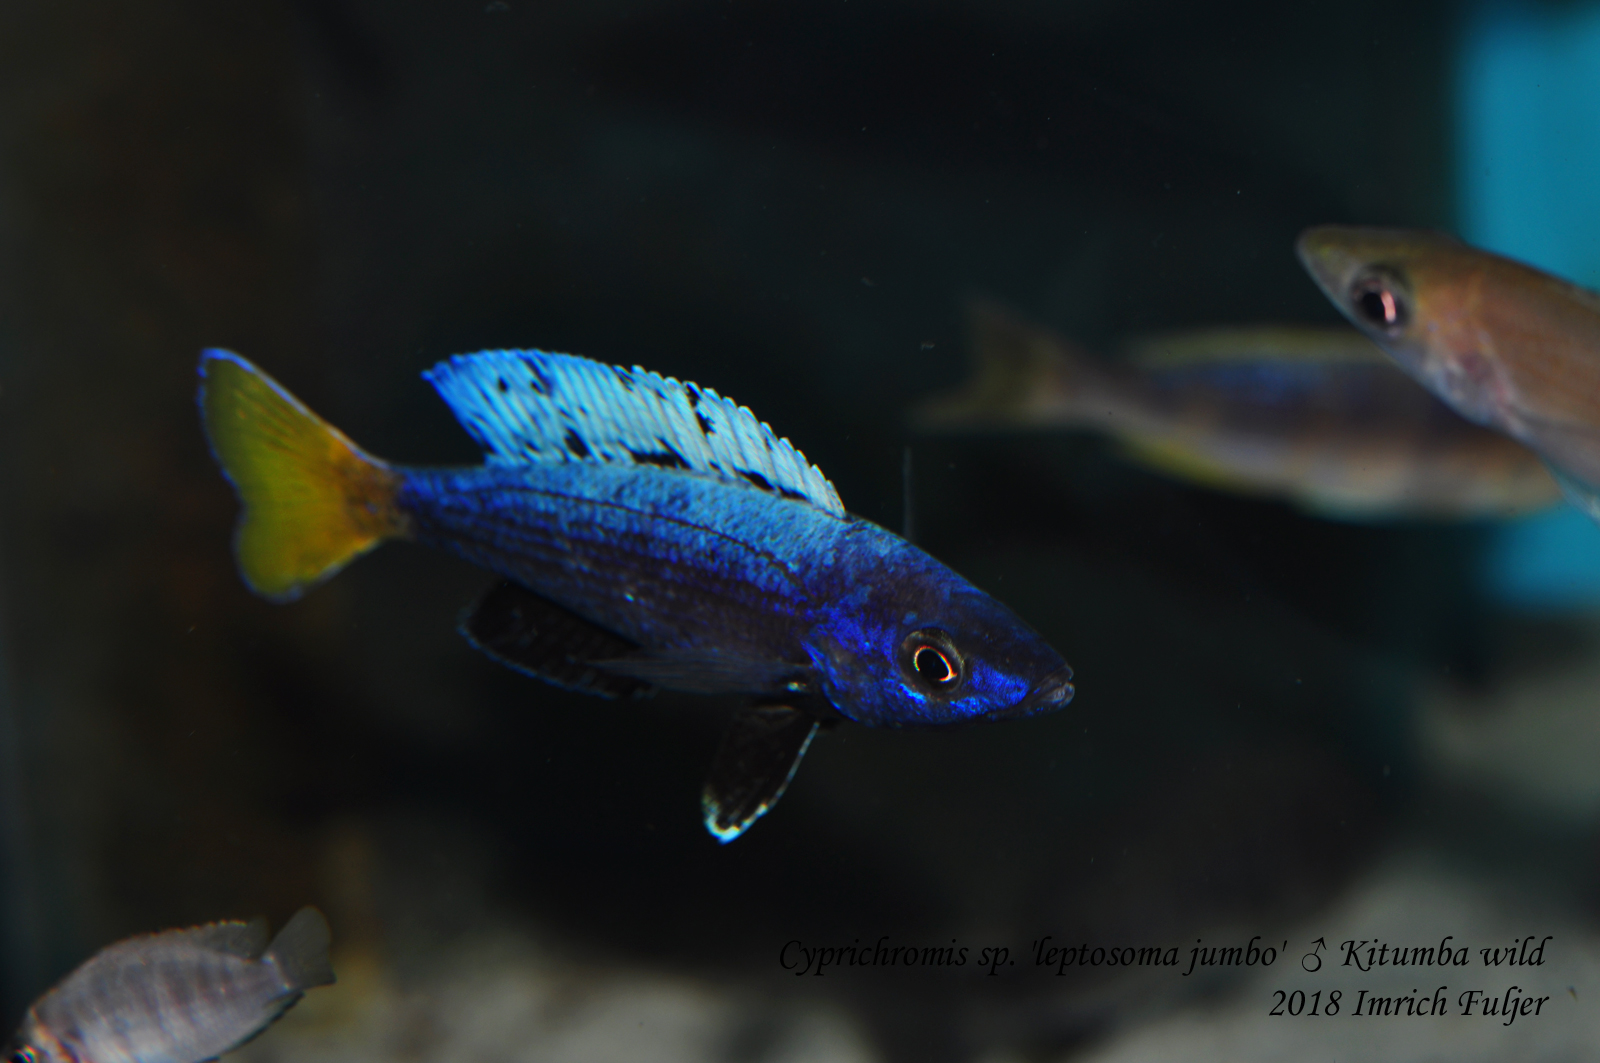 Cyprichromis sp. 'leptosoma jumbo' Kitumba